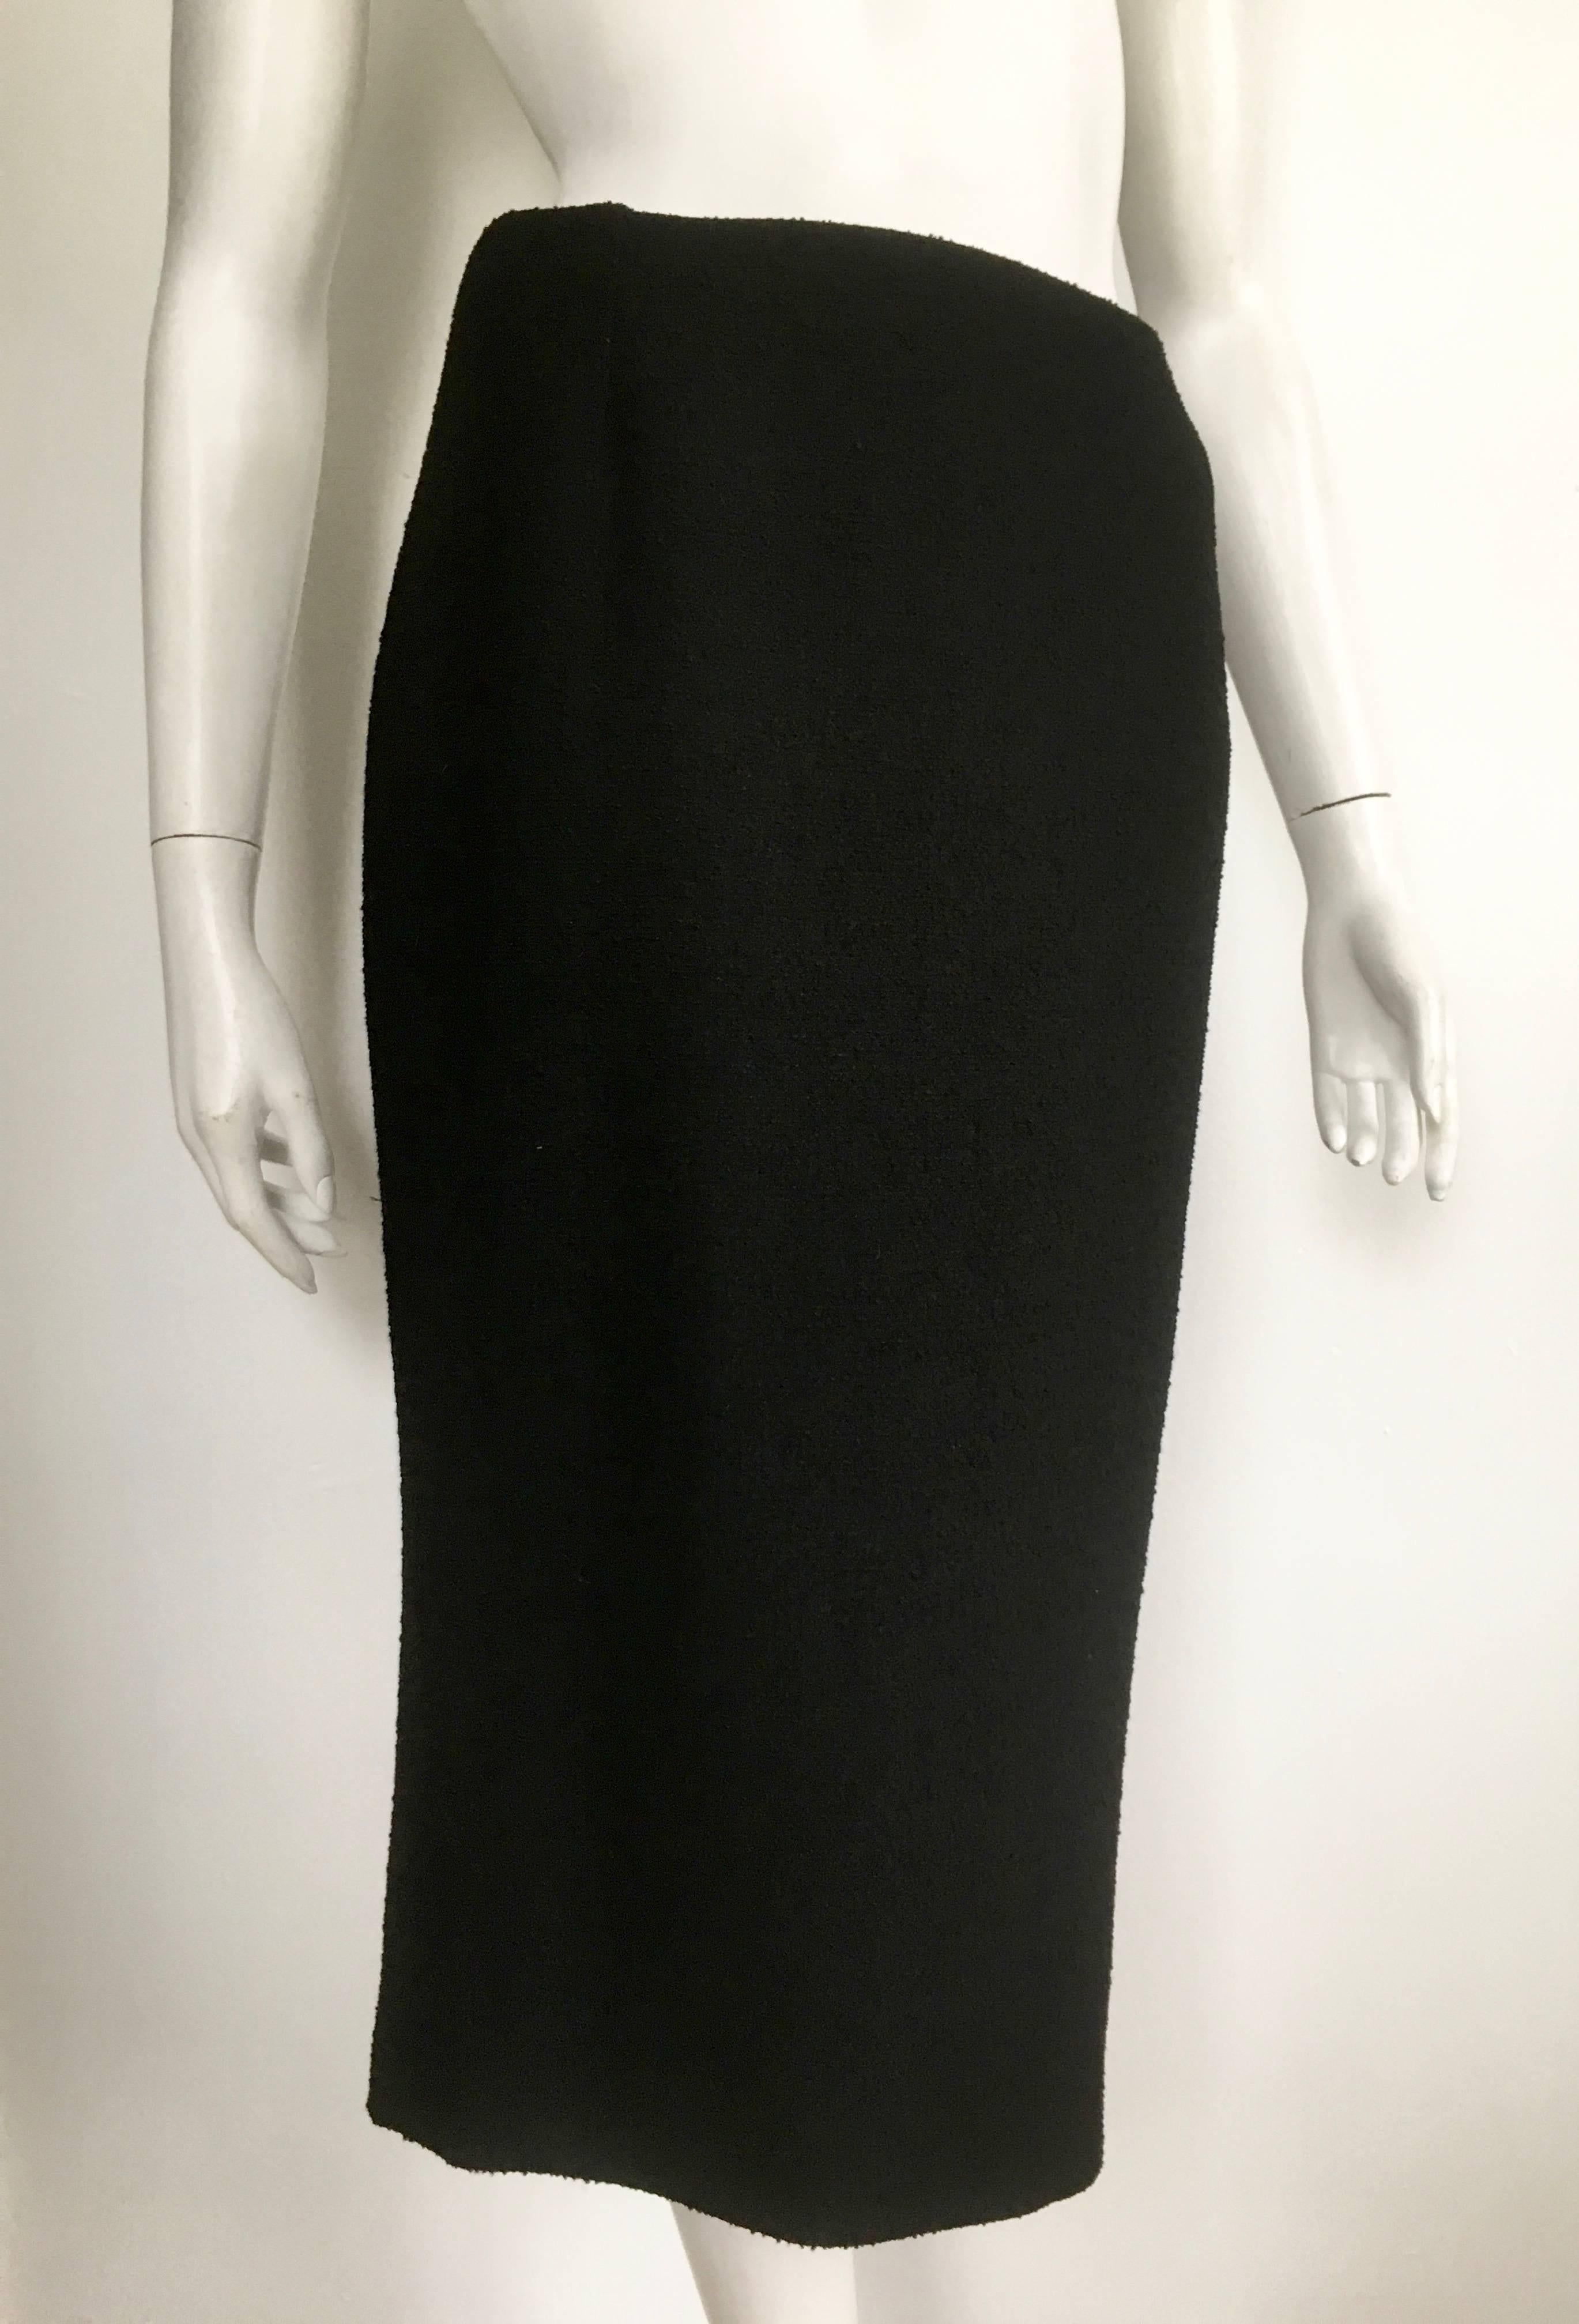 Gianni Versace Couture 1990s Black Boucle Fur Trim Skirt Suit Size 4. For Sale 4